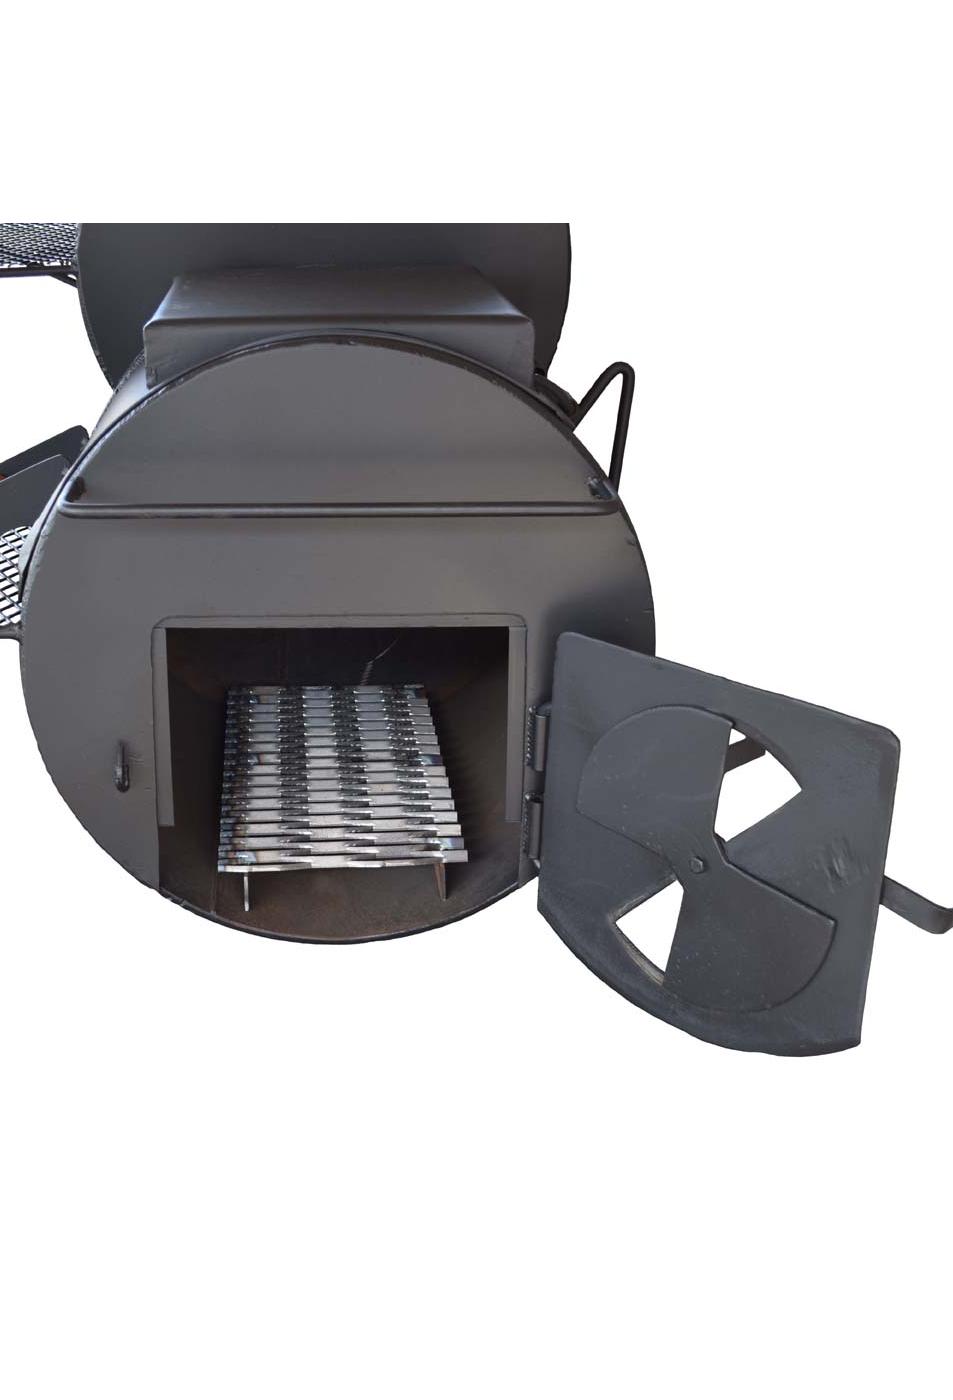 Lyfe Tyme 20" x 40" Single Lid Vertical Smoker with Firebox; image 2 of 4